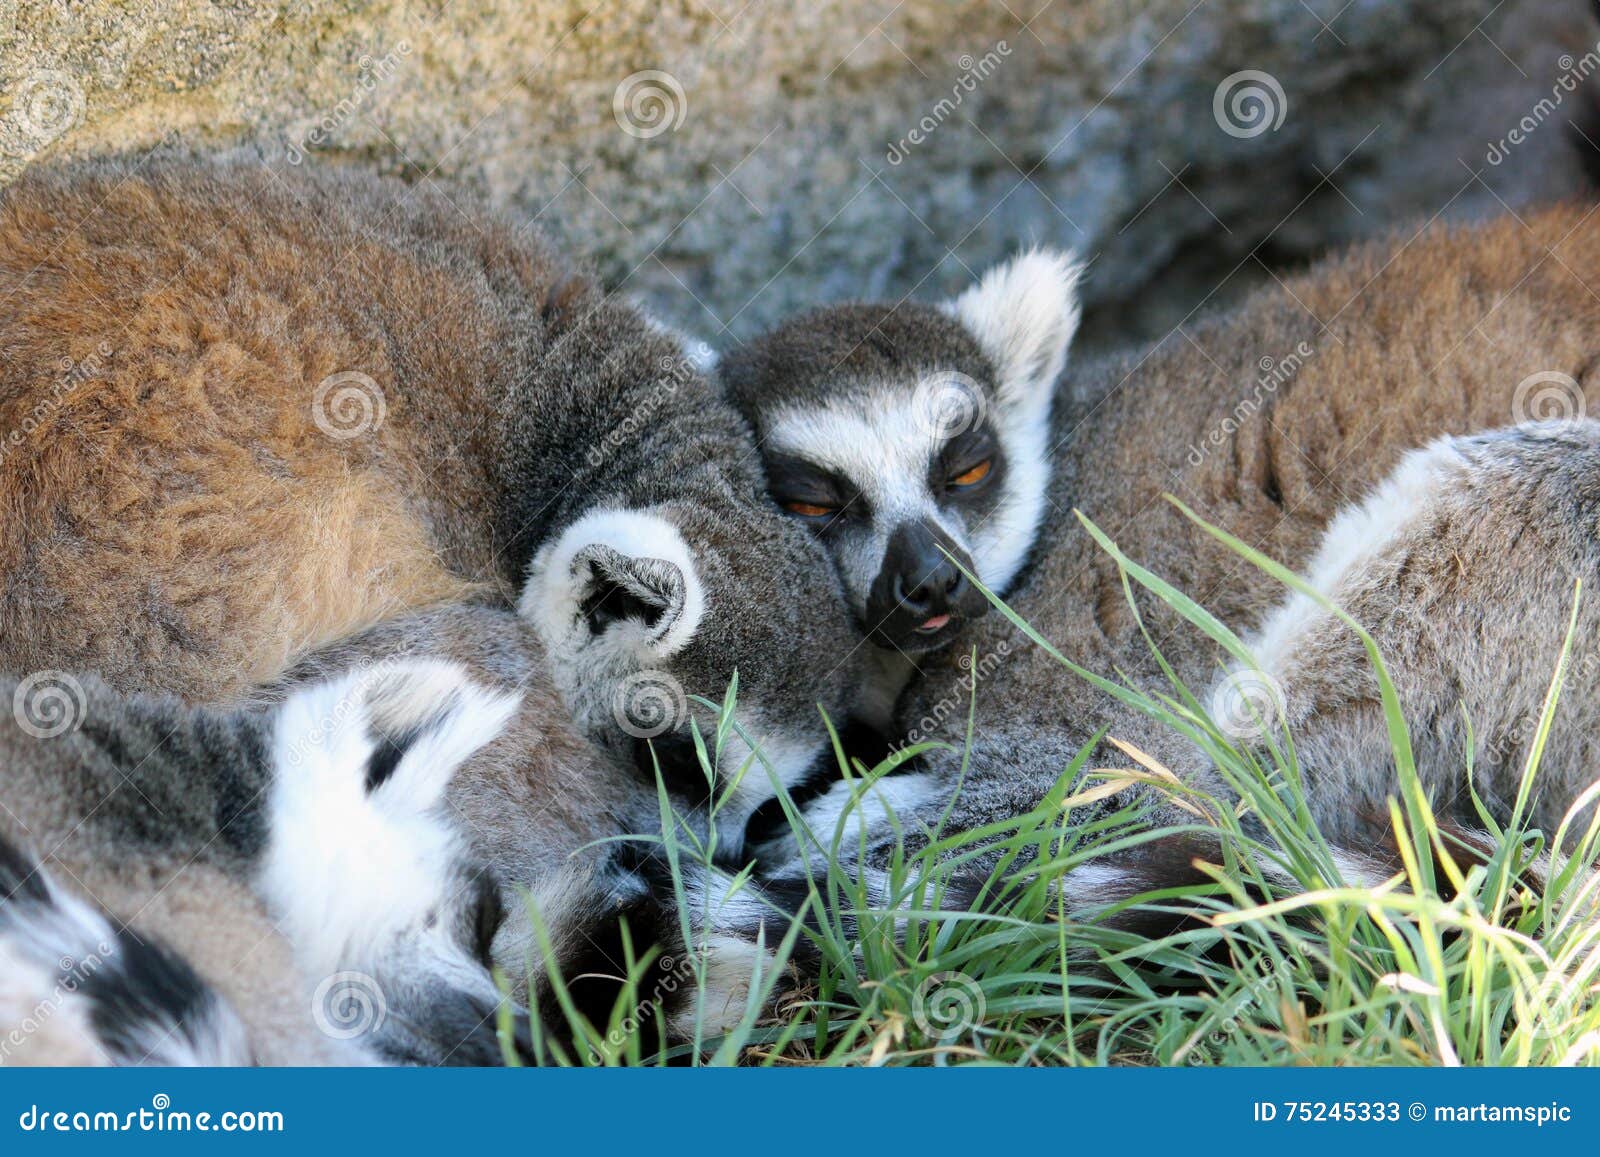 sleepy ring-tailed lemurs